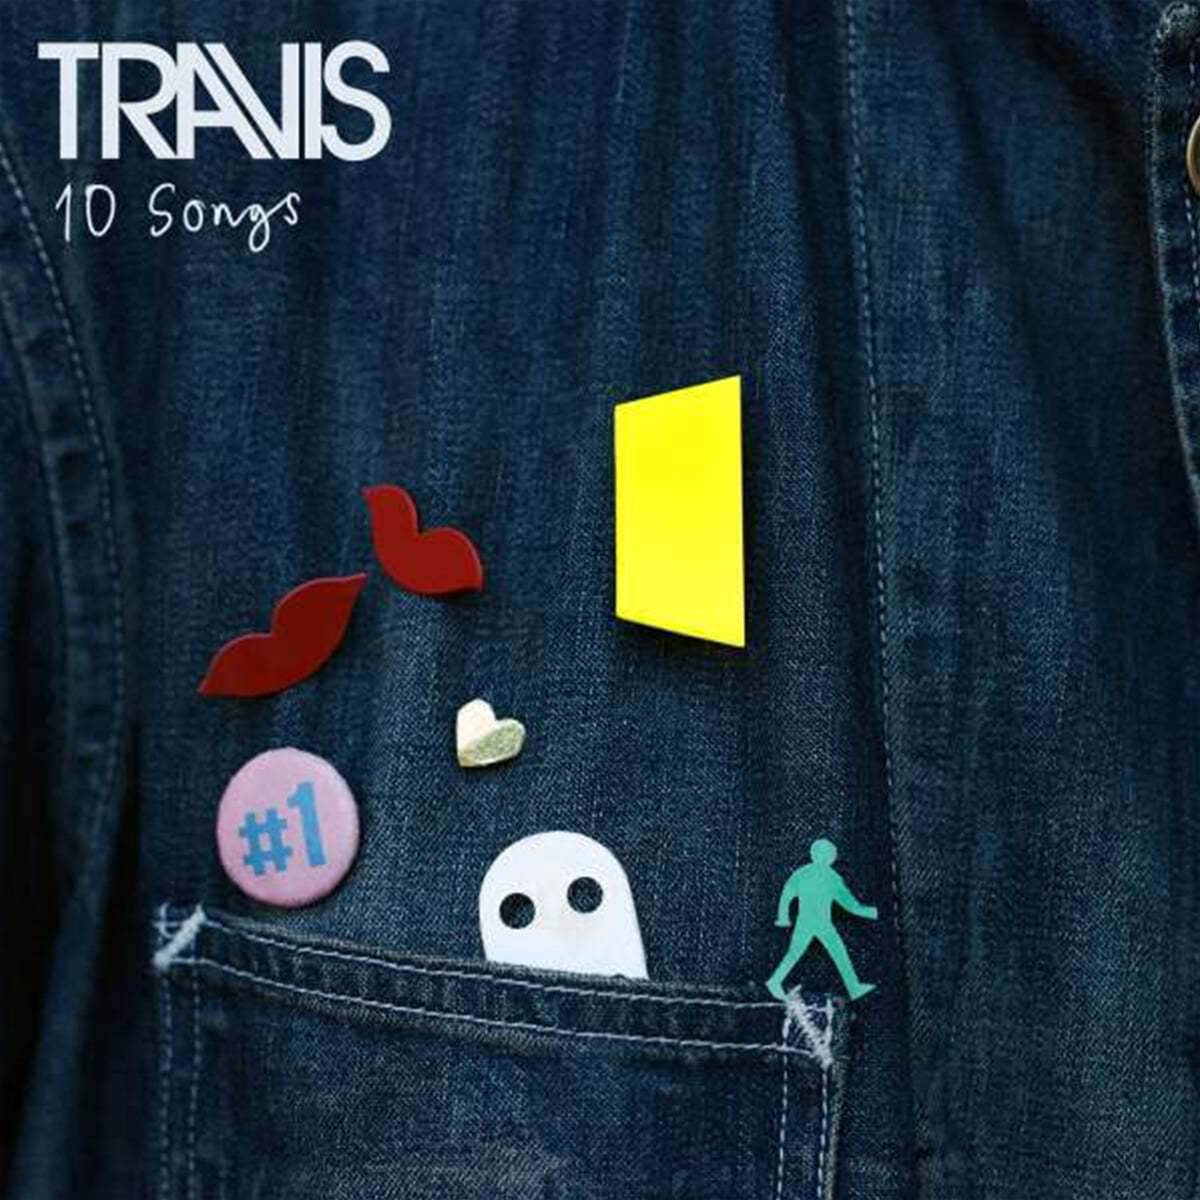 Travis (트래비스) - 10 Songs 